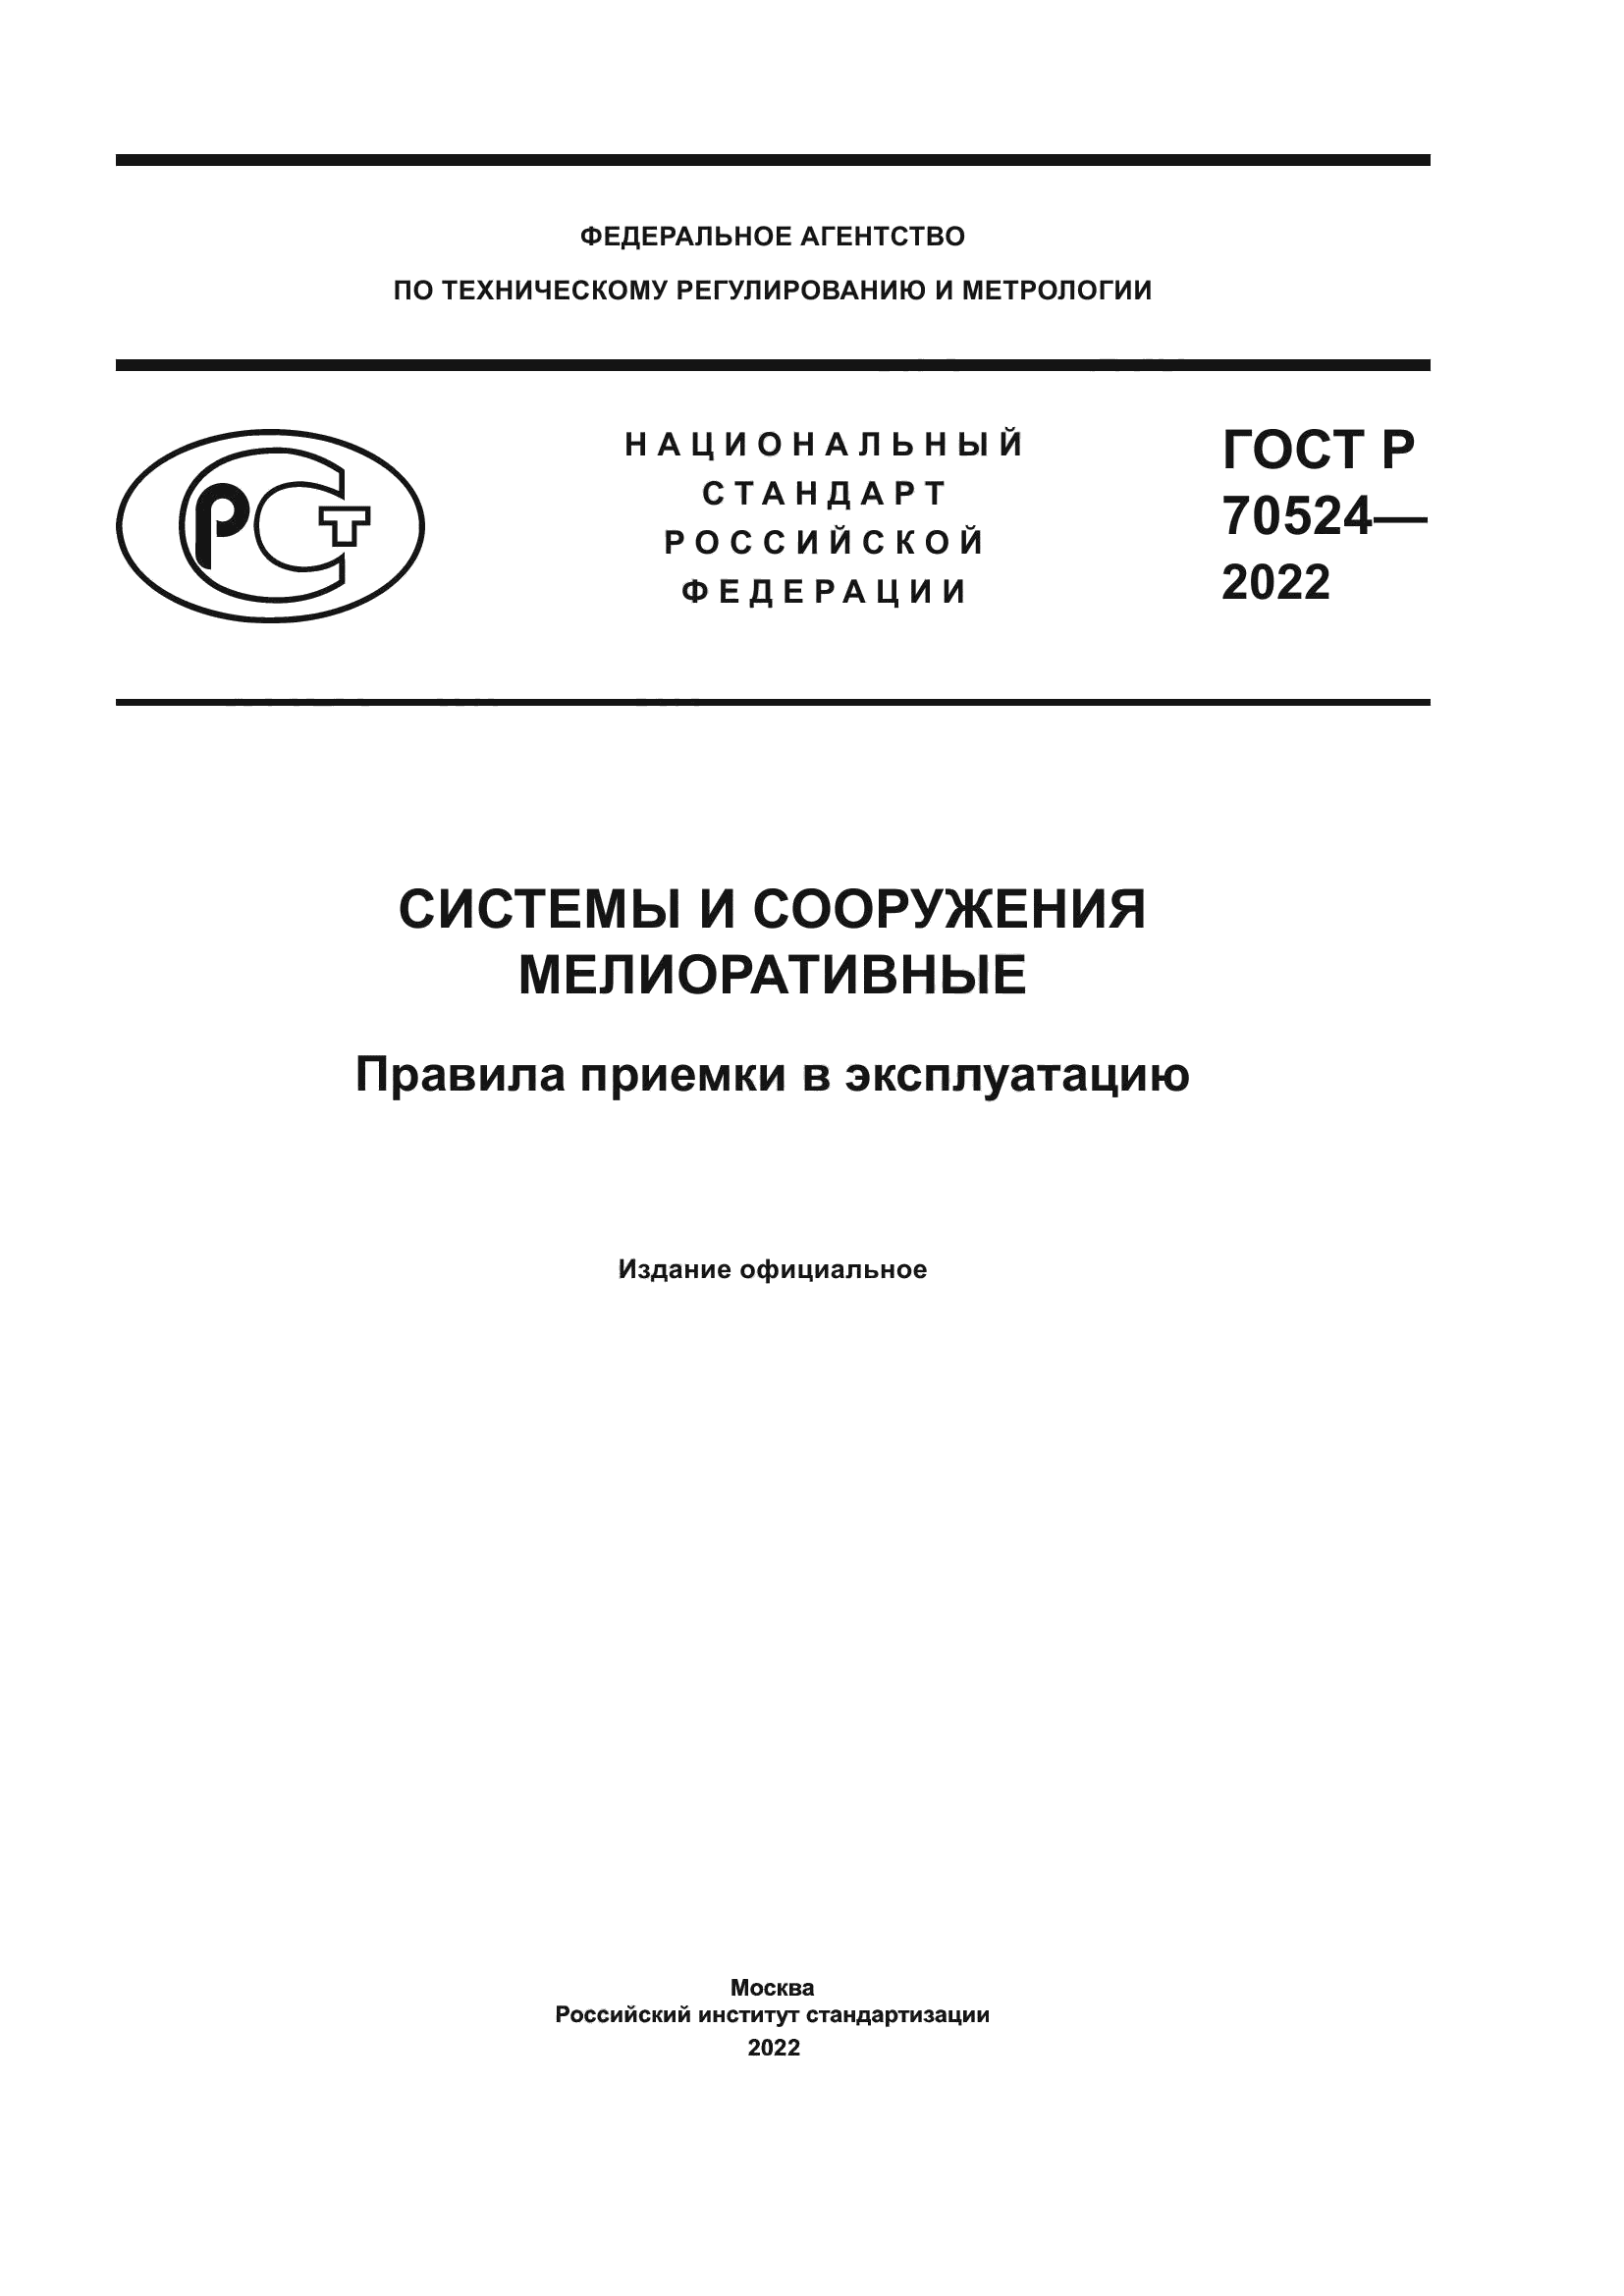 ГОСТ Р 70524-2022